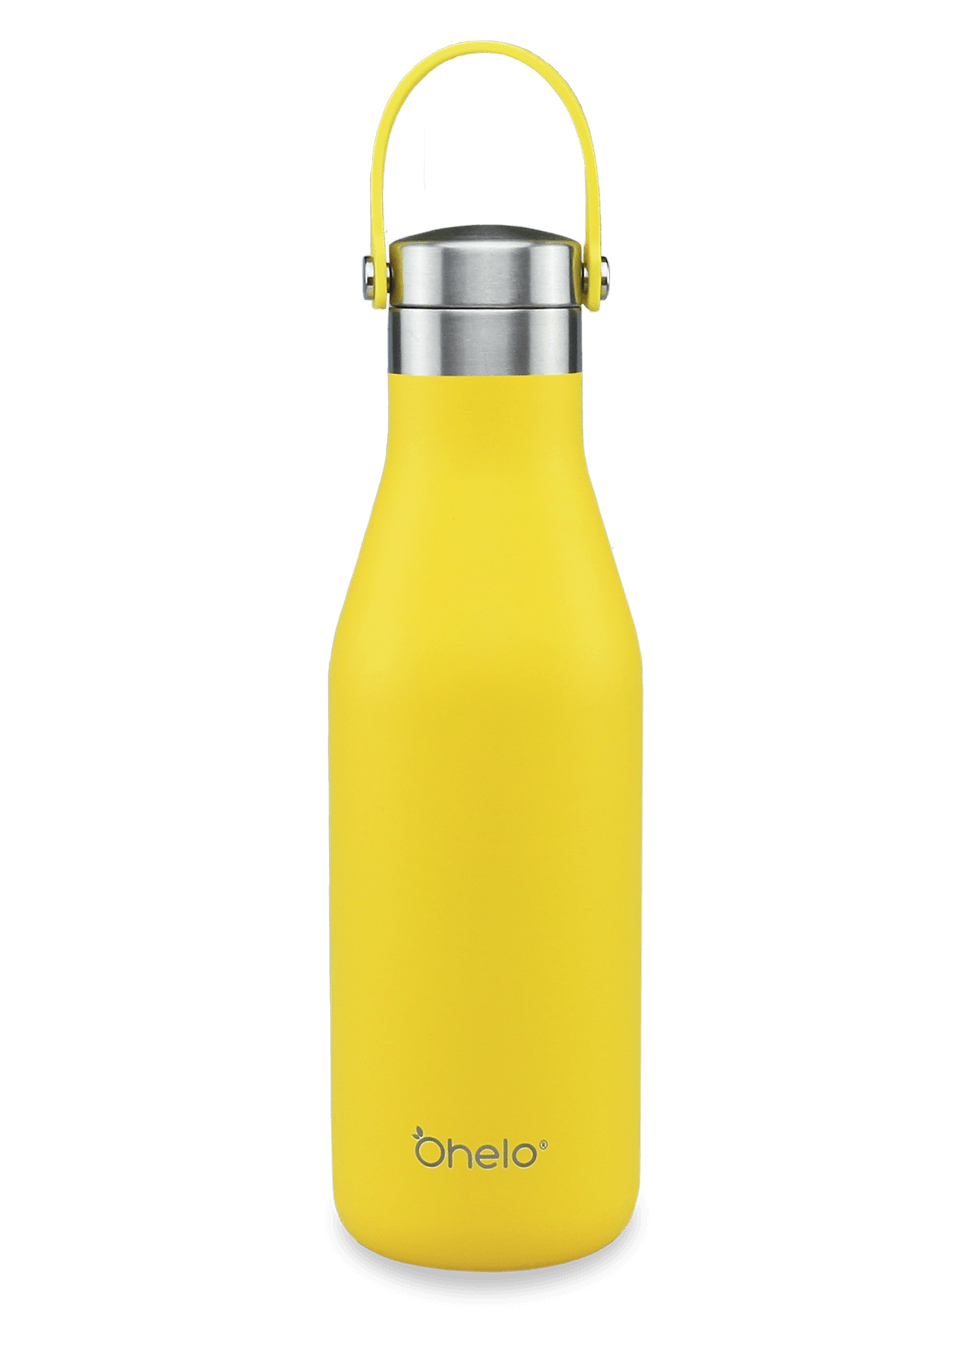 Ohelo eco friendly reusable bottle yellow